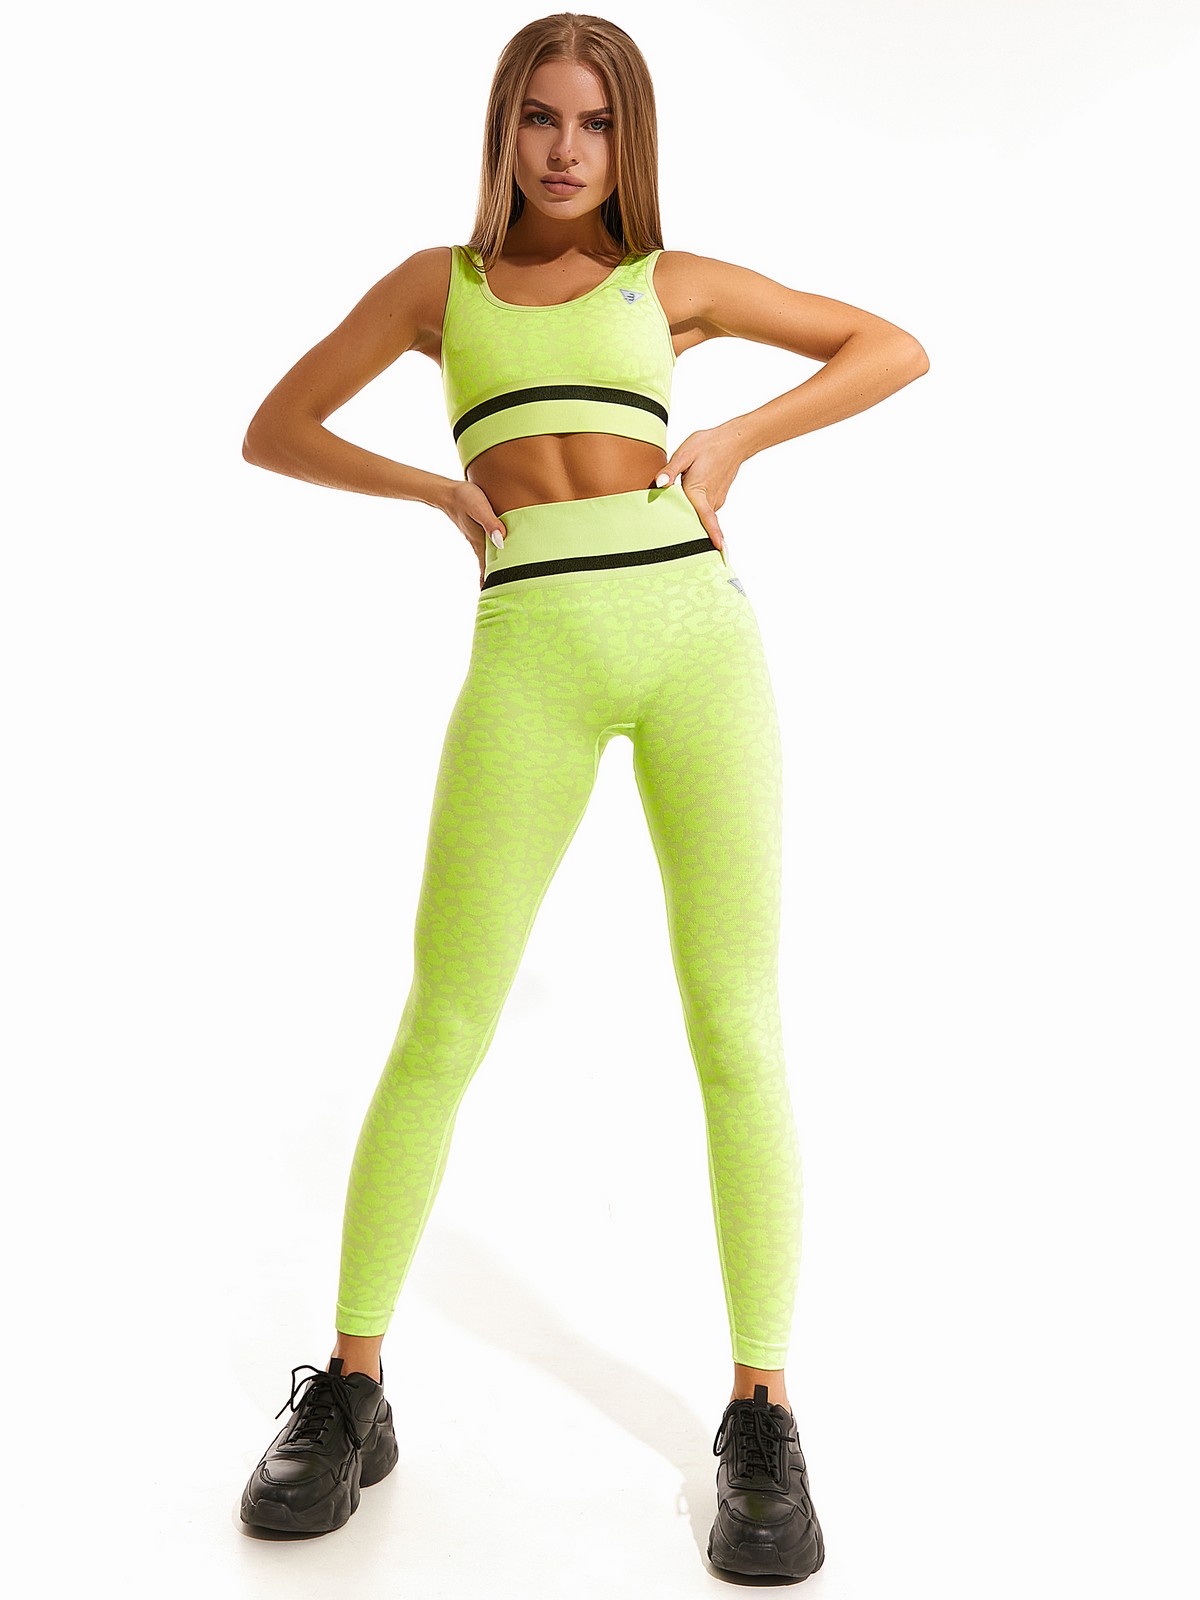 Топ SM Top LeoJeans Neon Green для спорта и фитнеса – фото №  5